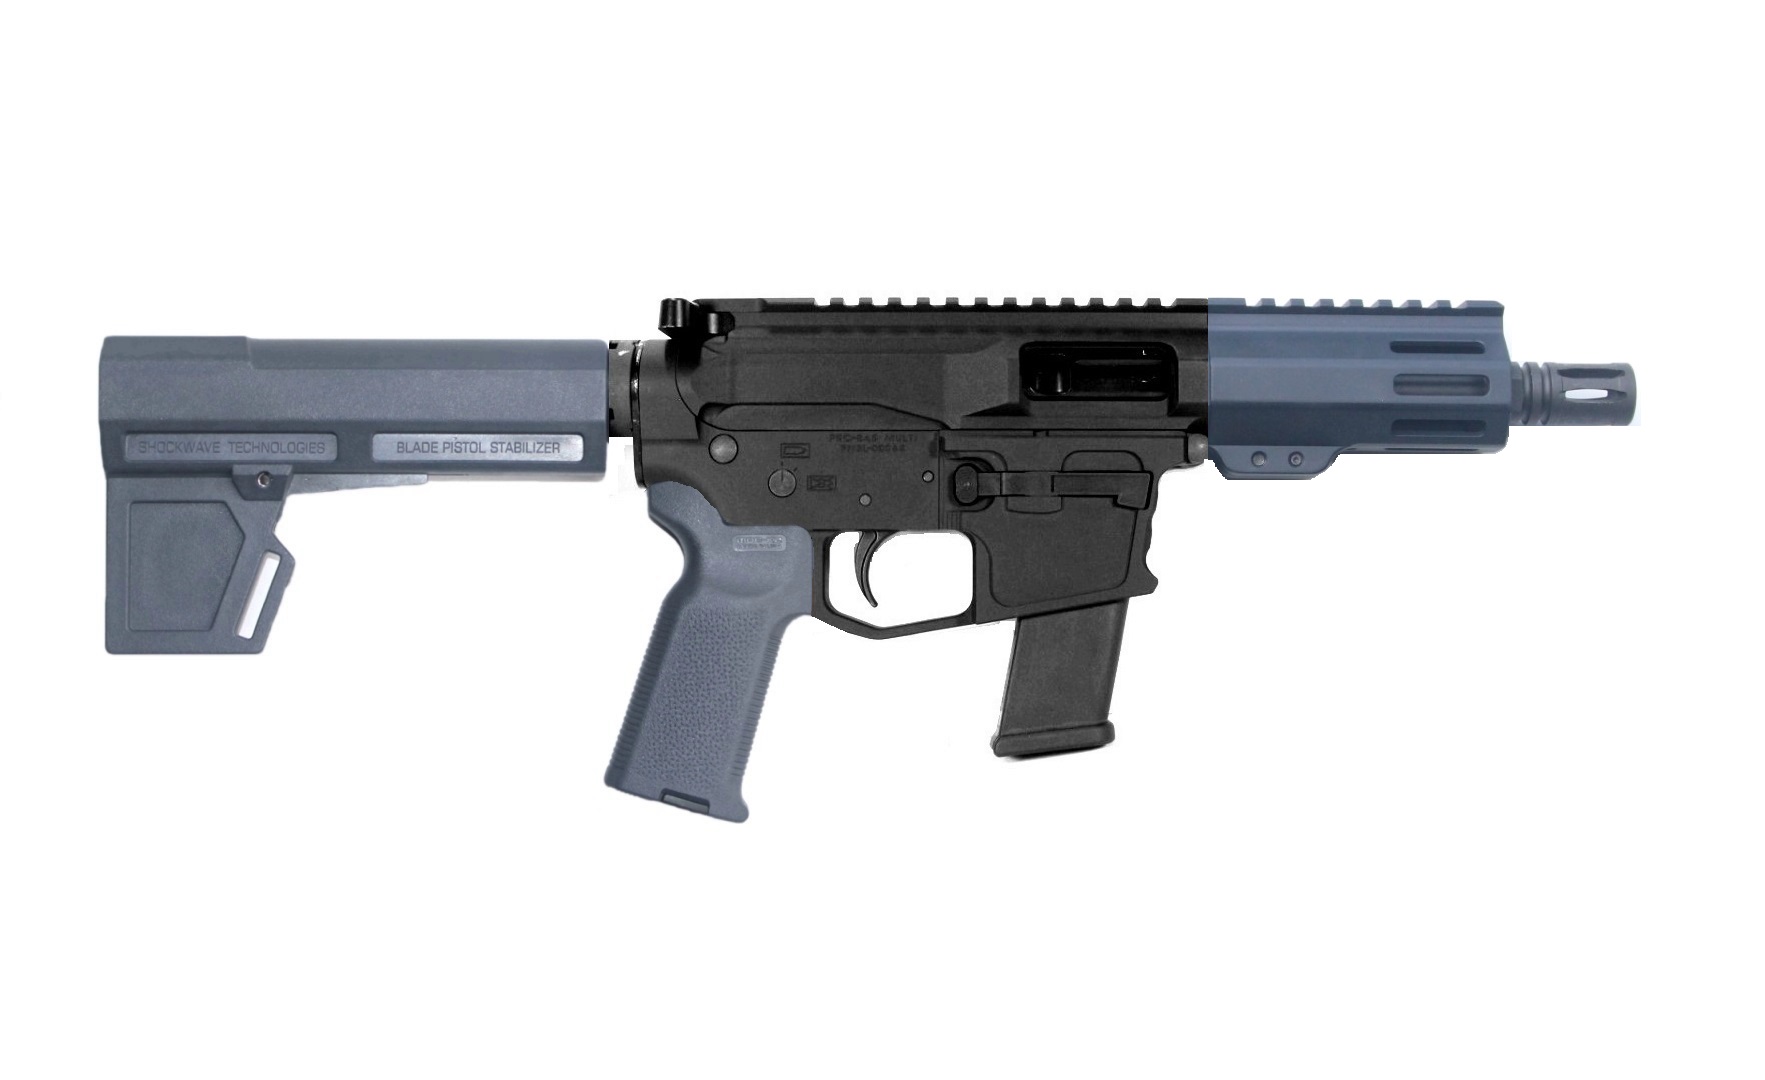 P2A PATRIOT 5.5" 40 S&W 1/16 Pistol Caliber Melonite M-LOK Pistol - For Suppressors - BLK/GRAY